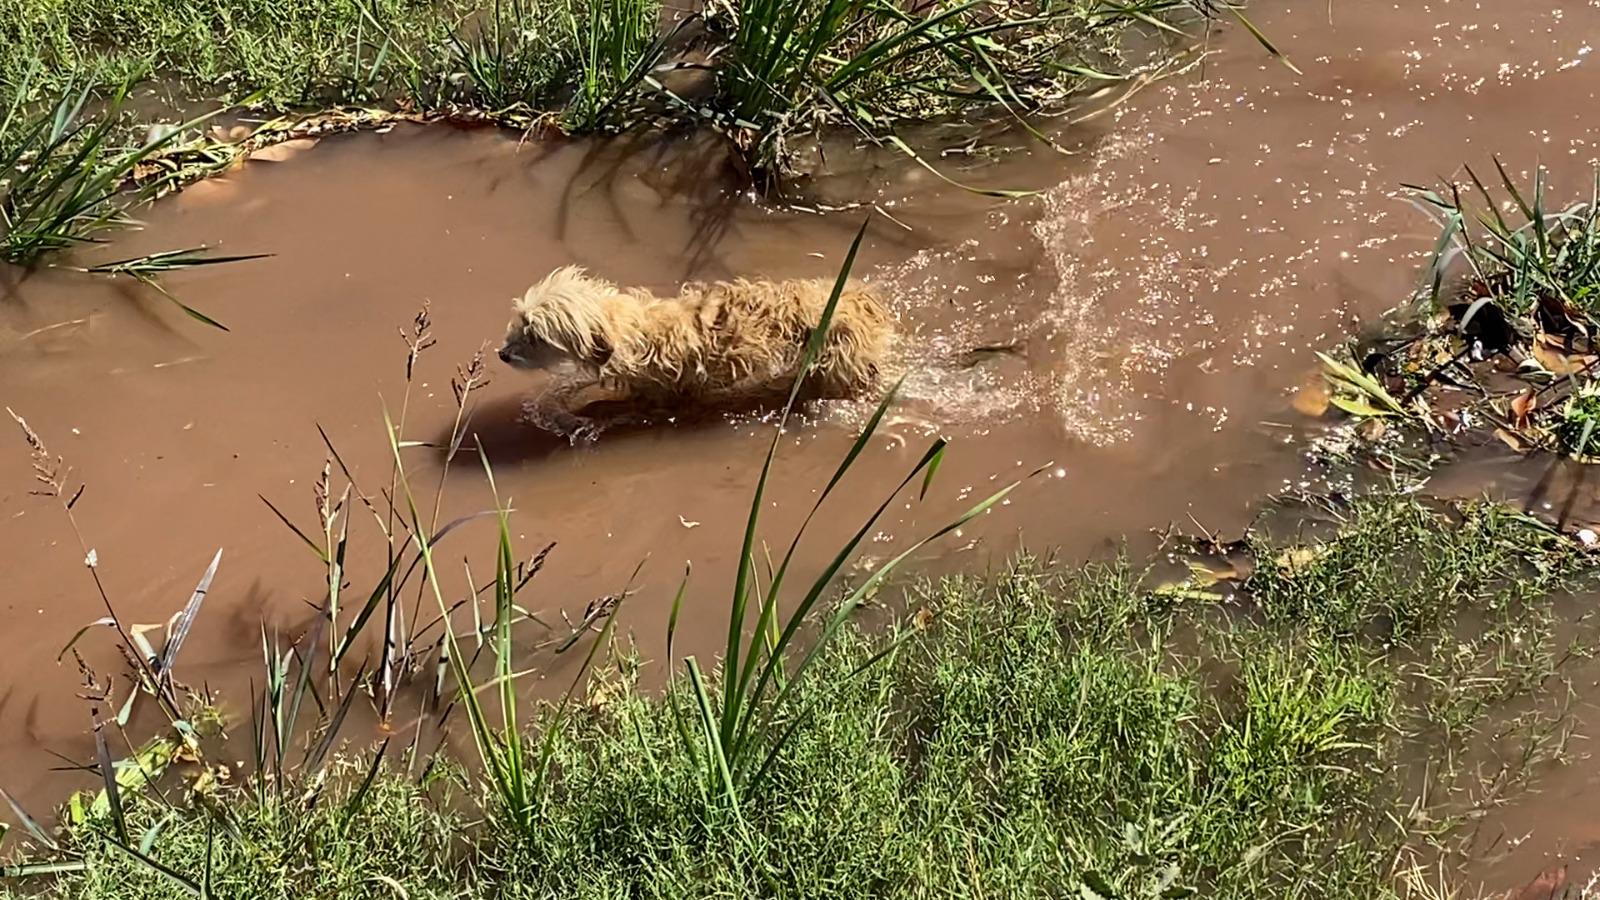 $!Protección Civil Culiacán rescata a un perrito de un dren